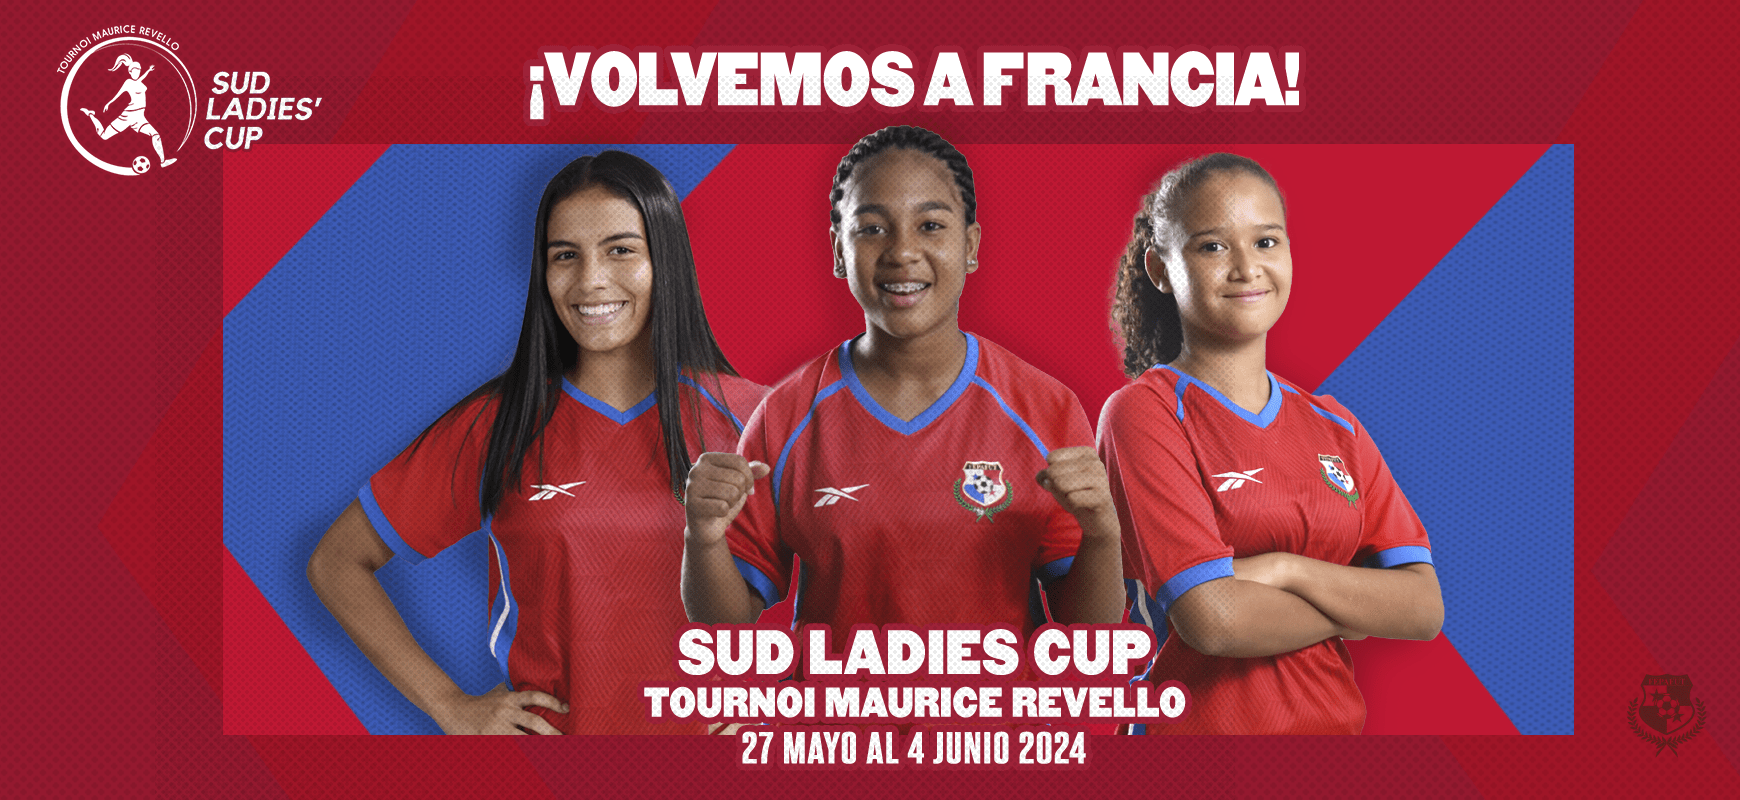 Sud Ladies Cup web